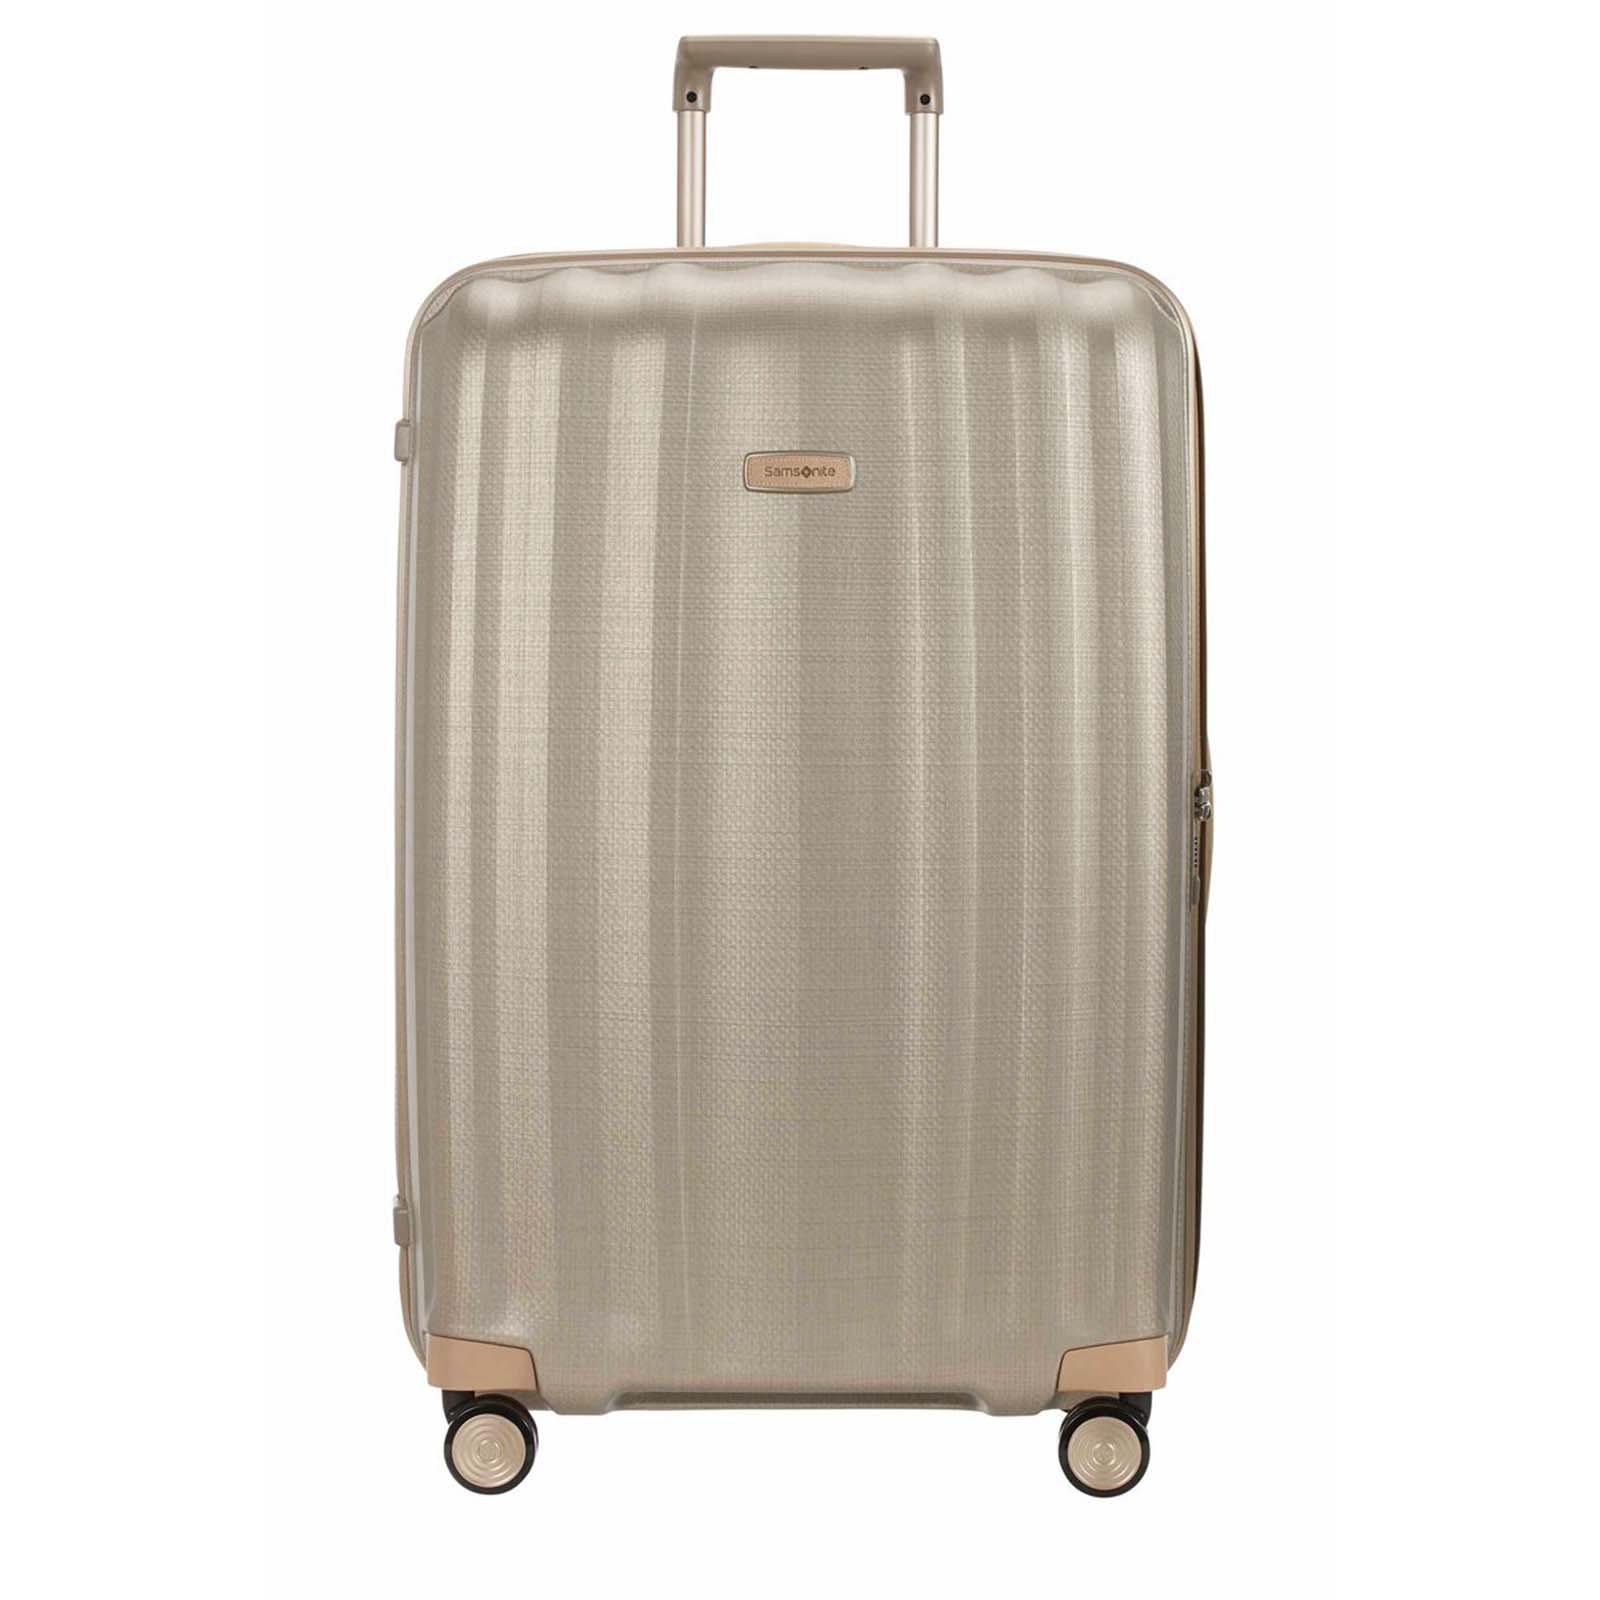 Samsonite-Lite-Cube-Prime-82cm-Suitcase-Ivory-Gold-Front